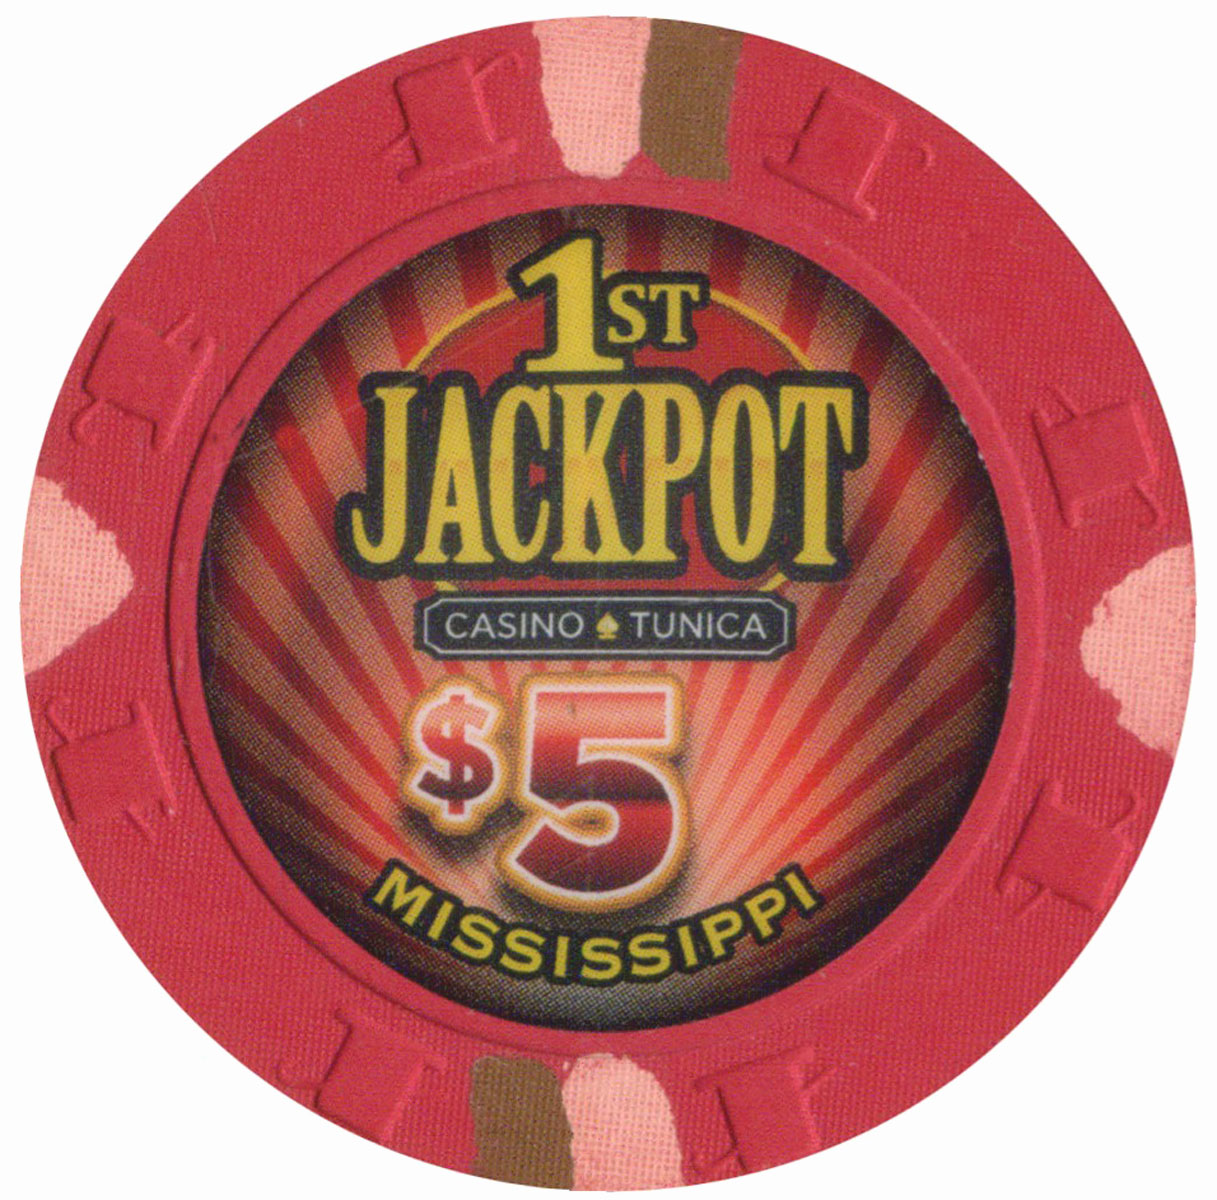 Jackpot Casino Tunica